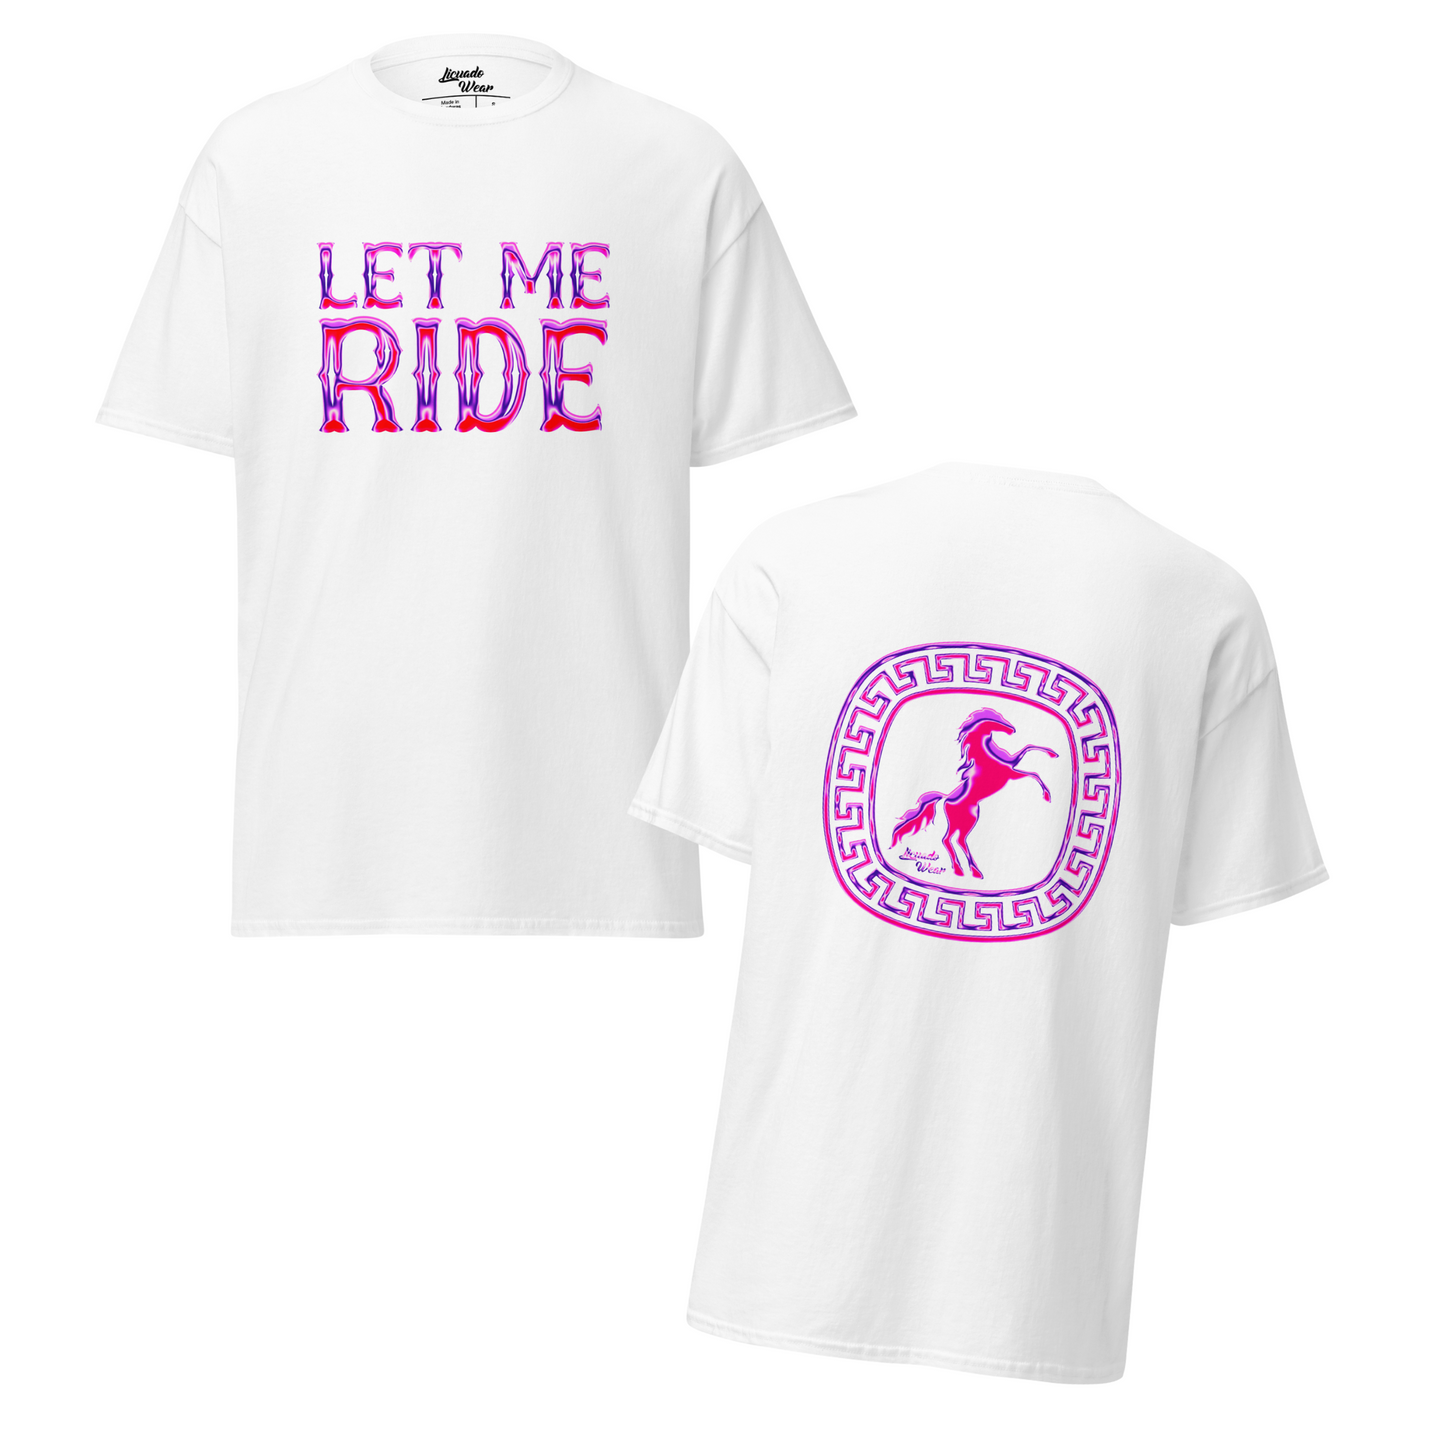 Let Me Ride (Pink Chrome Caballo/Horse) - Unisex T-shirt